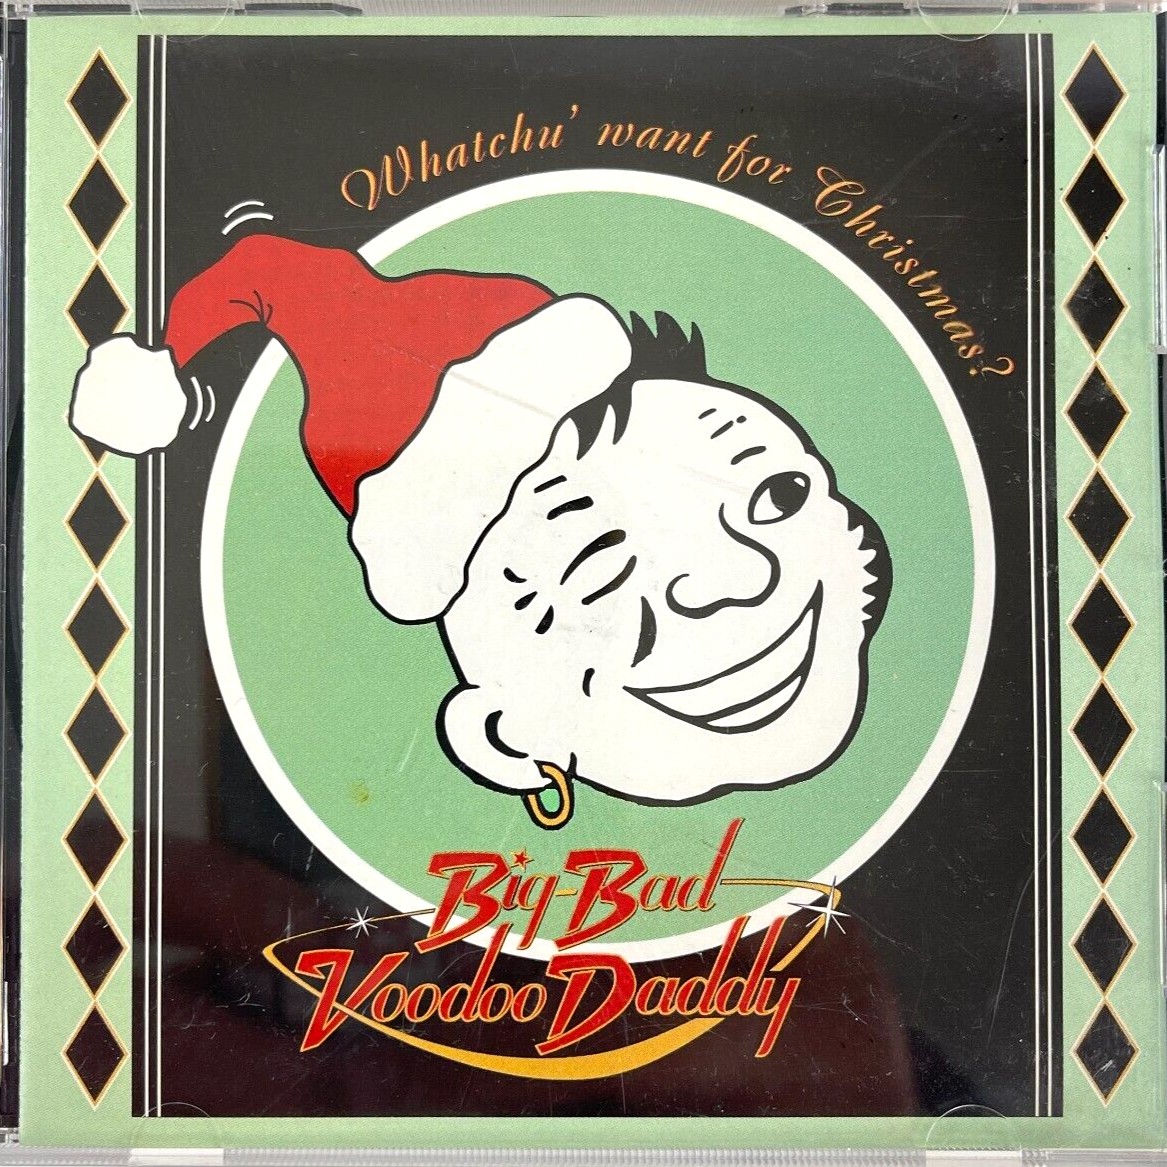 Primary image for Big Bad Voodoo Daddy Whatchu Want For Christmas CD 1995 Big Band Swing No UPC